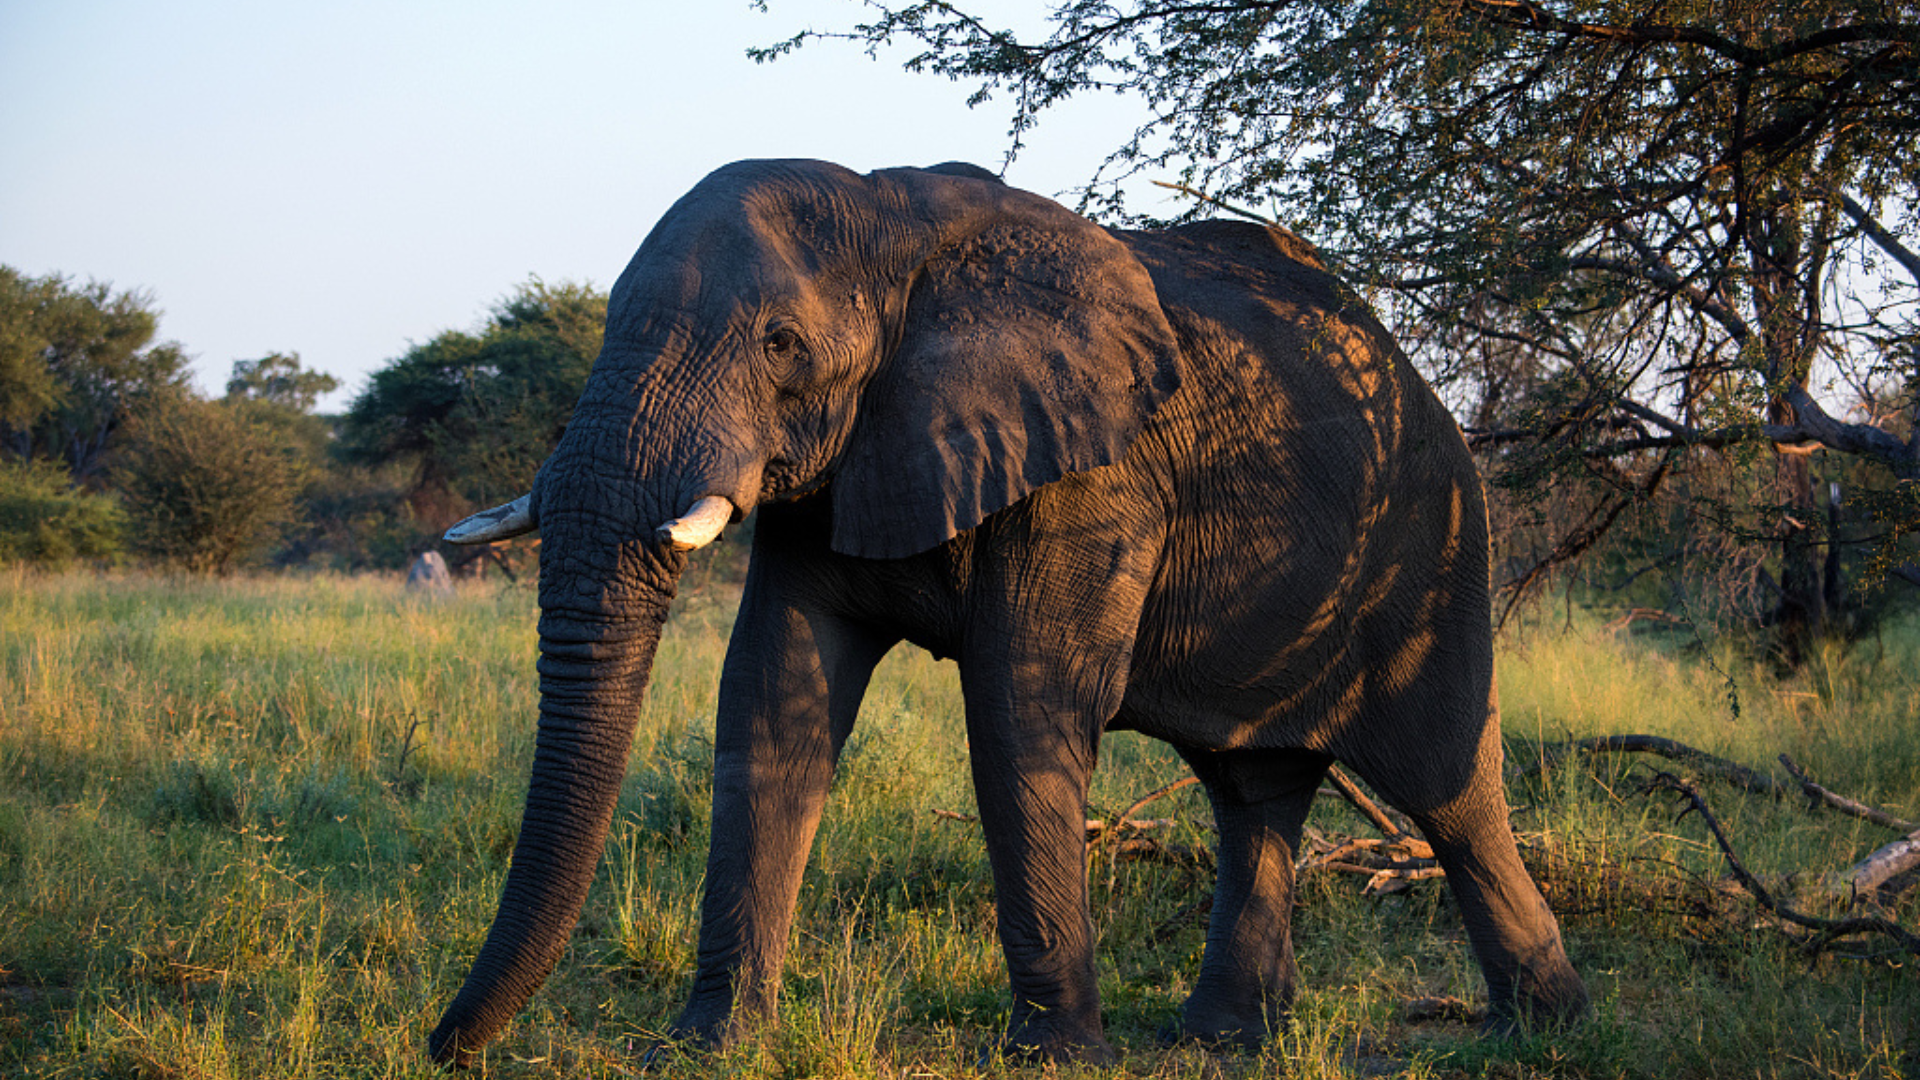 Elephants in Botswana nature reserve. /CFP